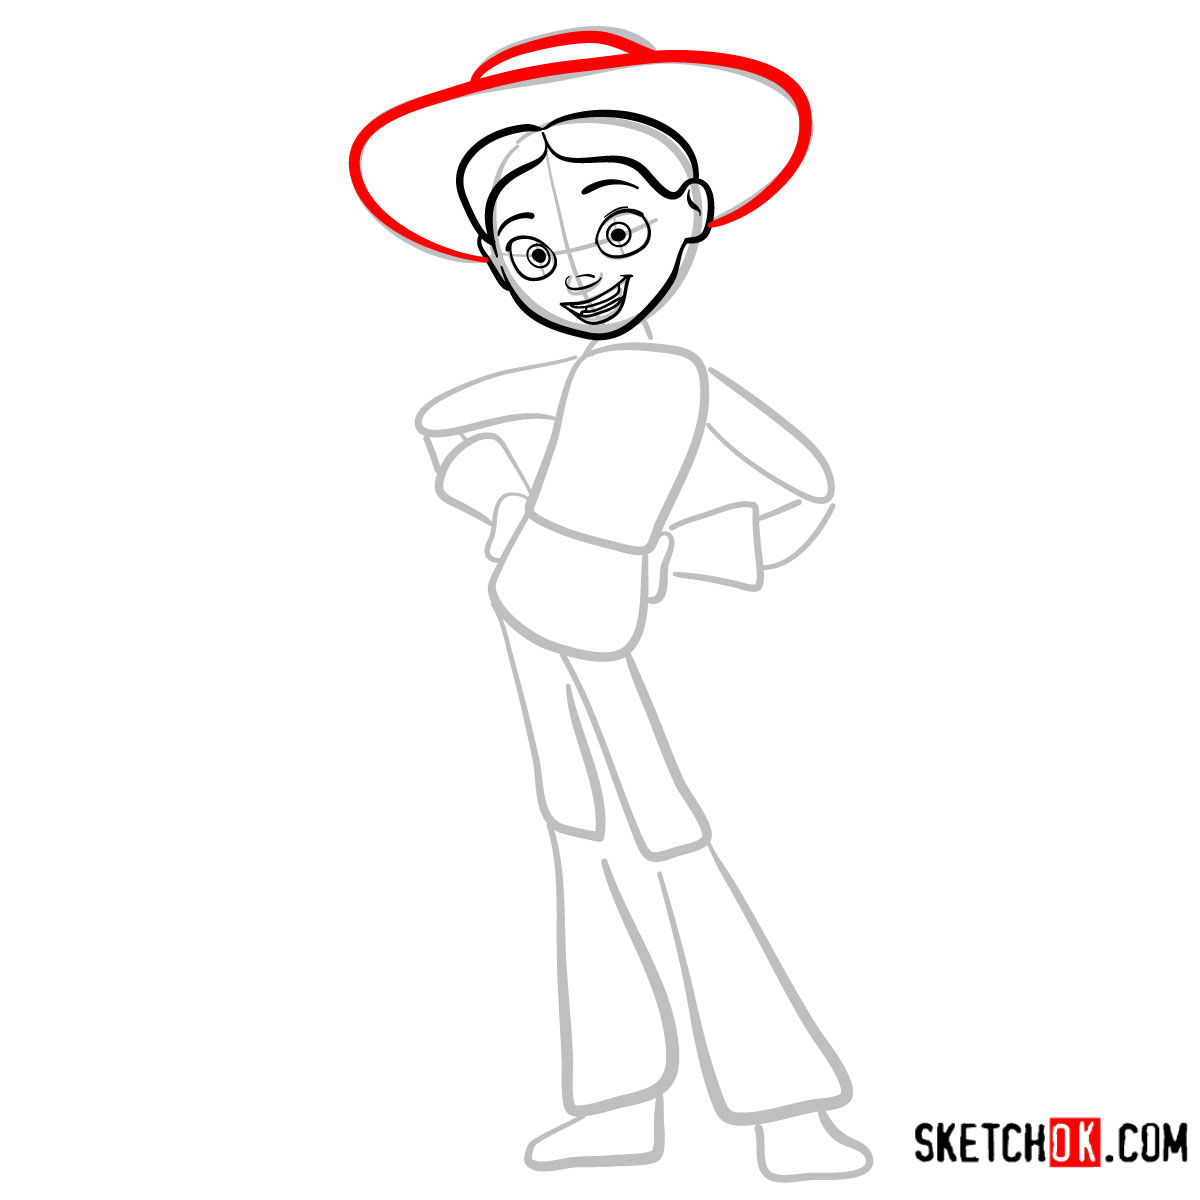 How to draw Jessie from Toy Story 2 - step 05